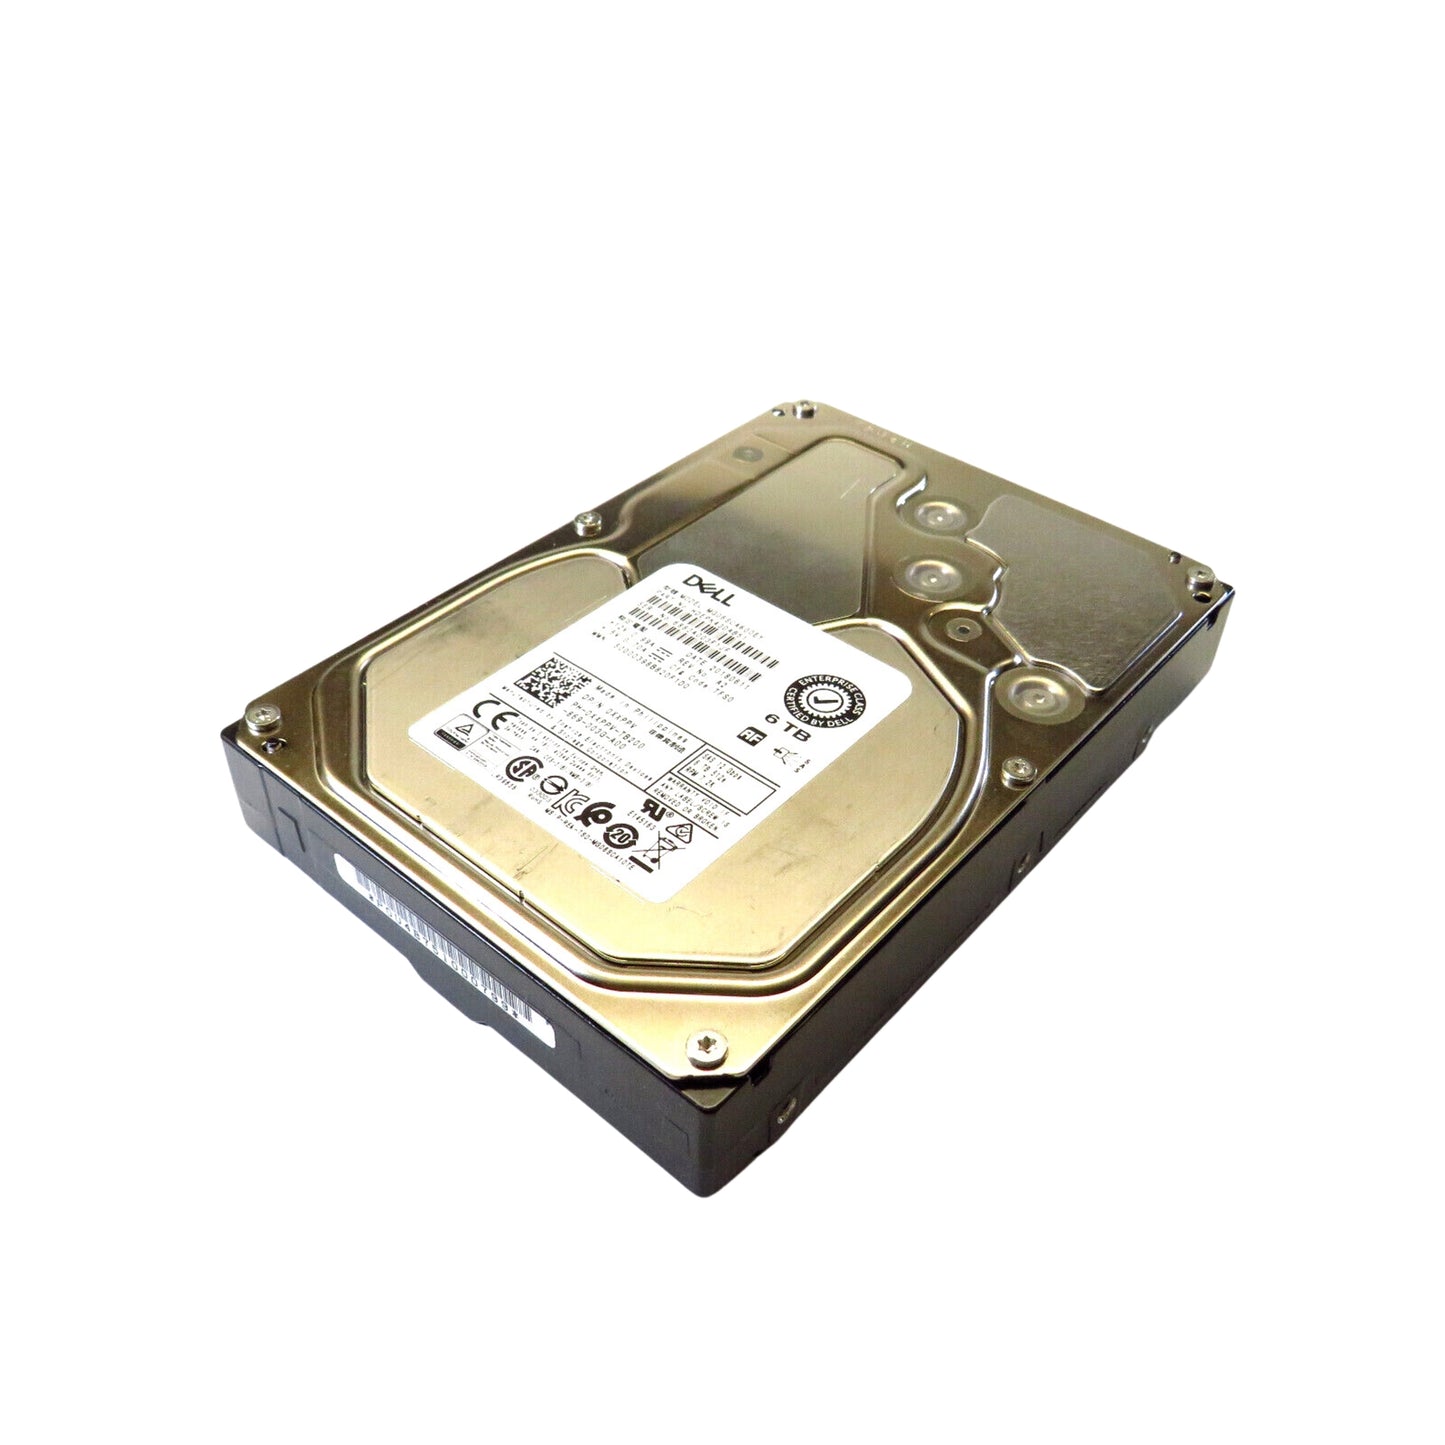 Dell XXPPV 3.5" 6TB 7200RPM SAS 12Gb/s Hard Disk Drive (HDD), Silver (Refurbished)